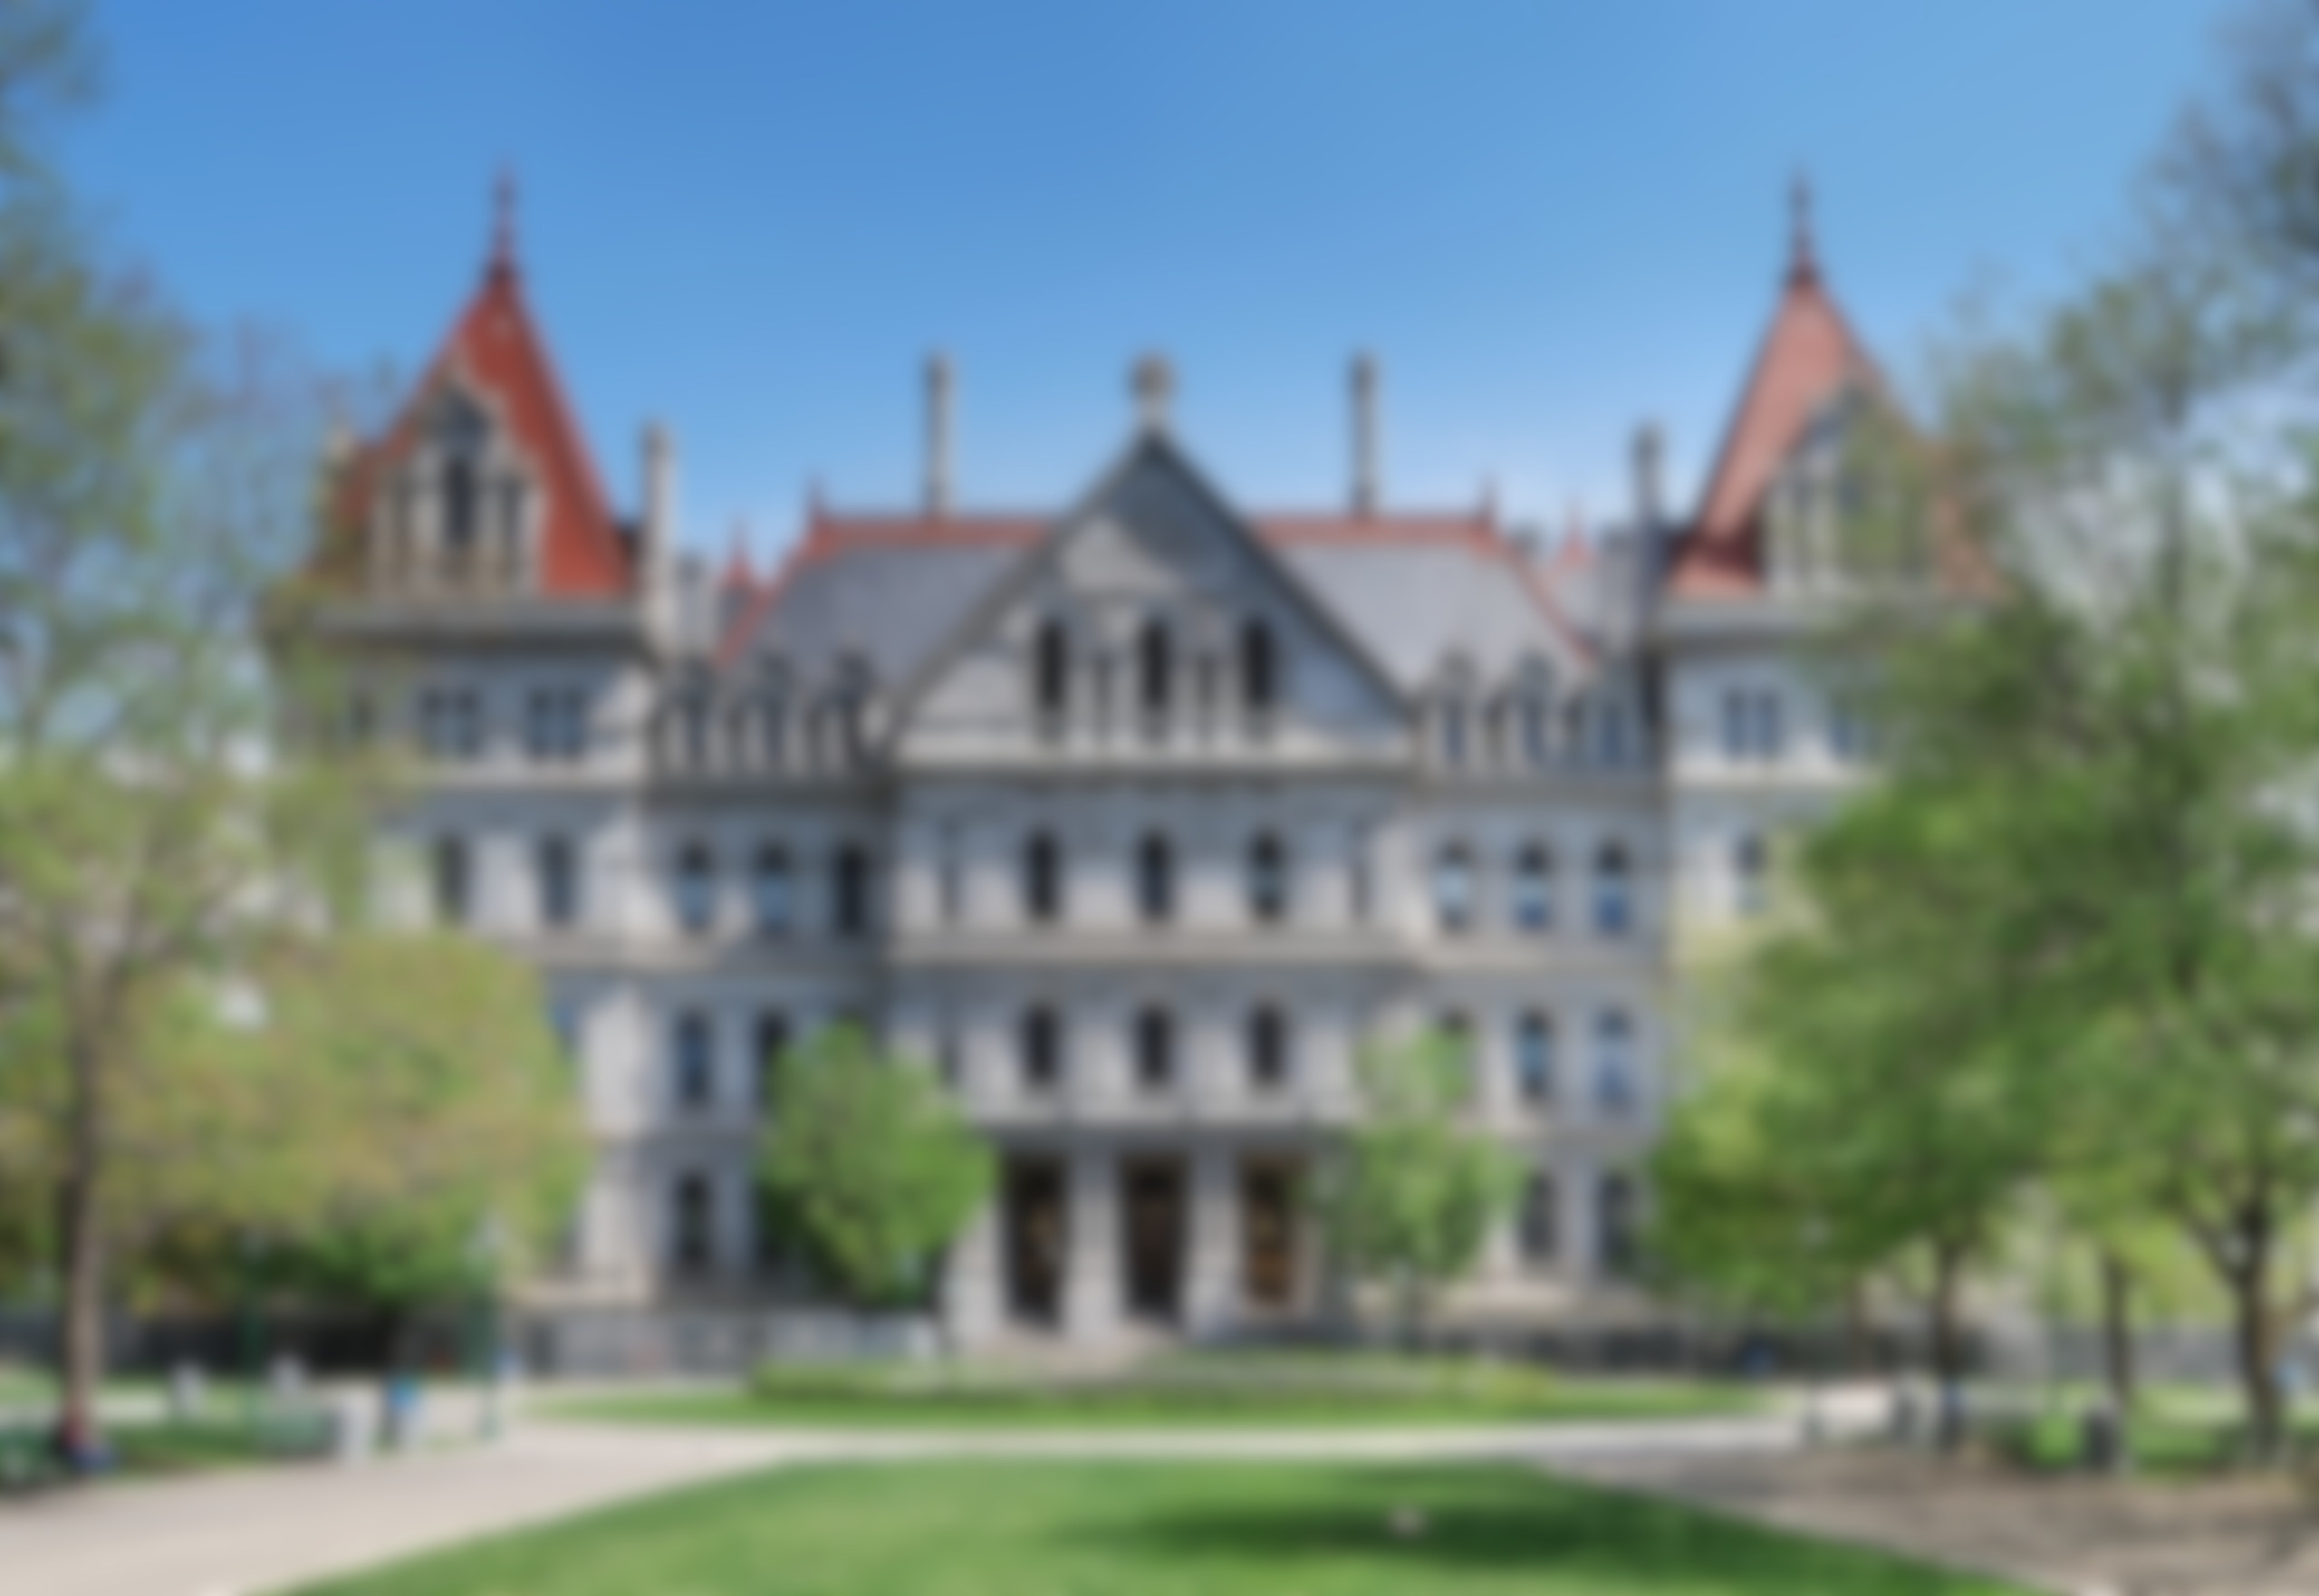 Lobbster Lobbying: NYS Capitol Building